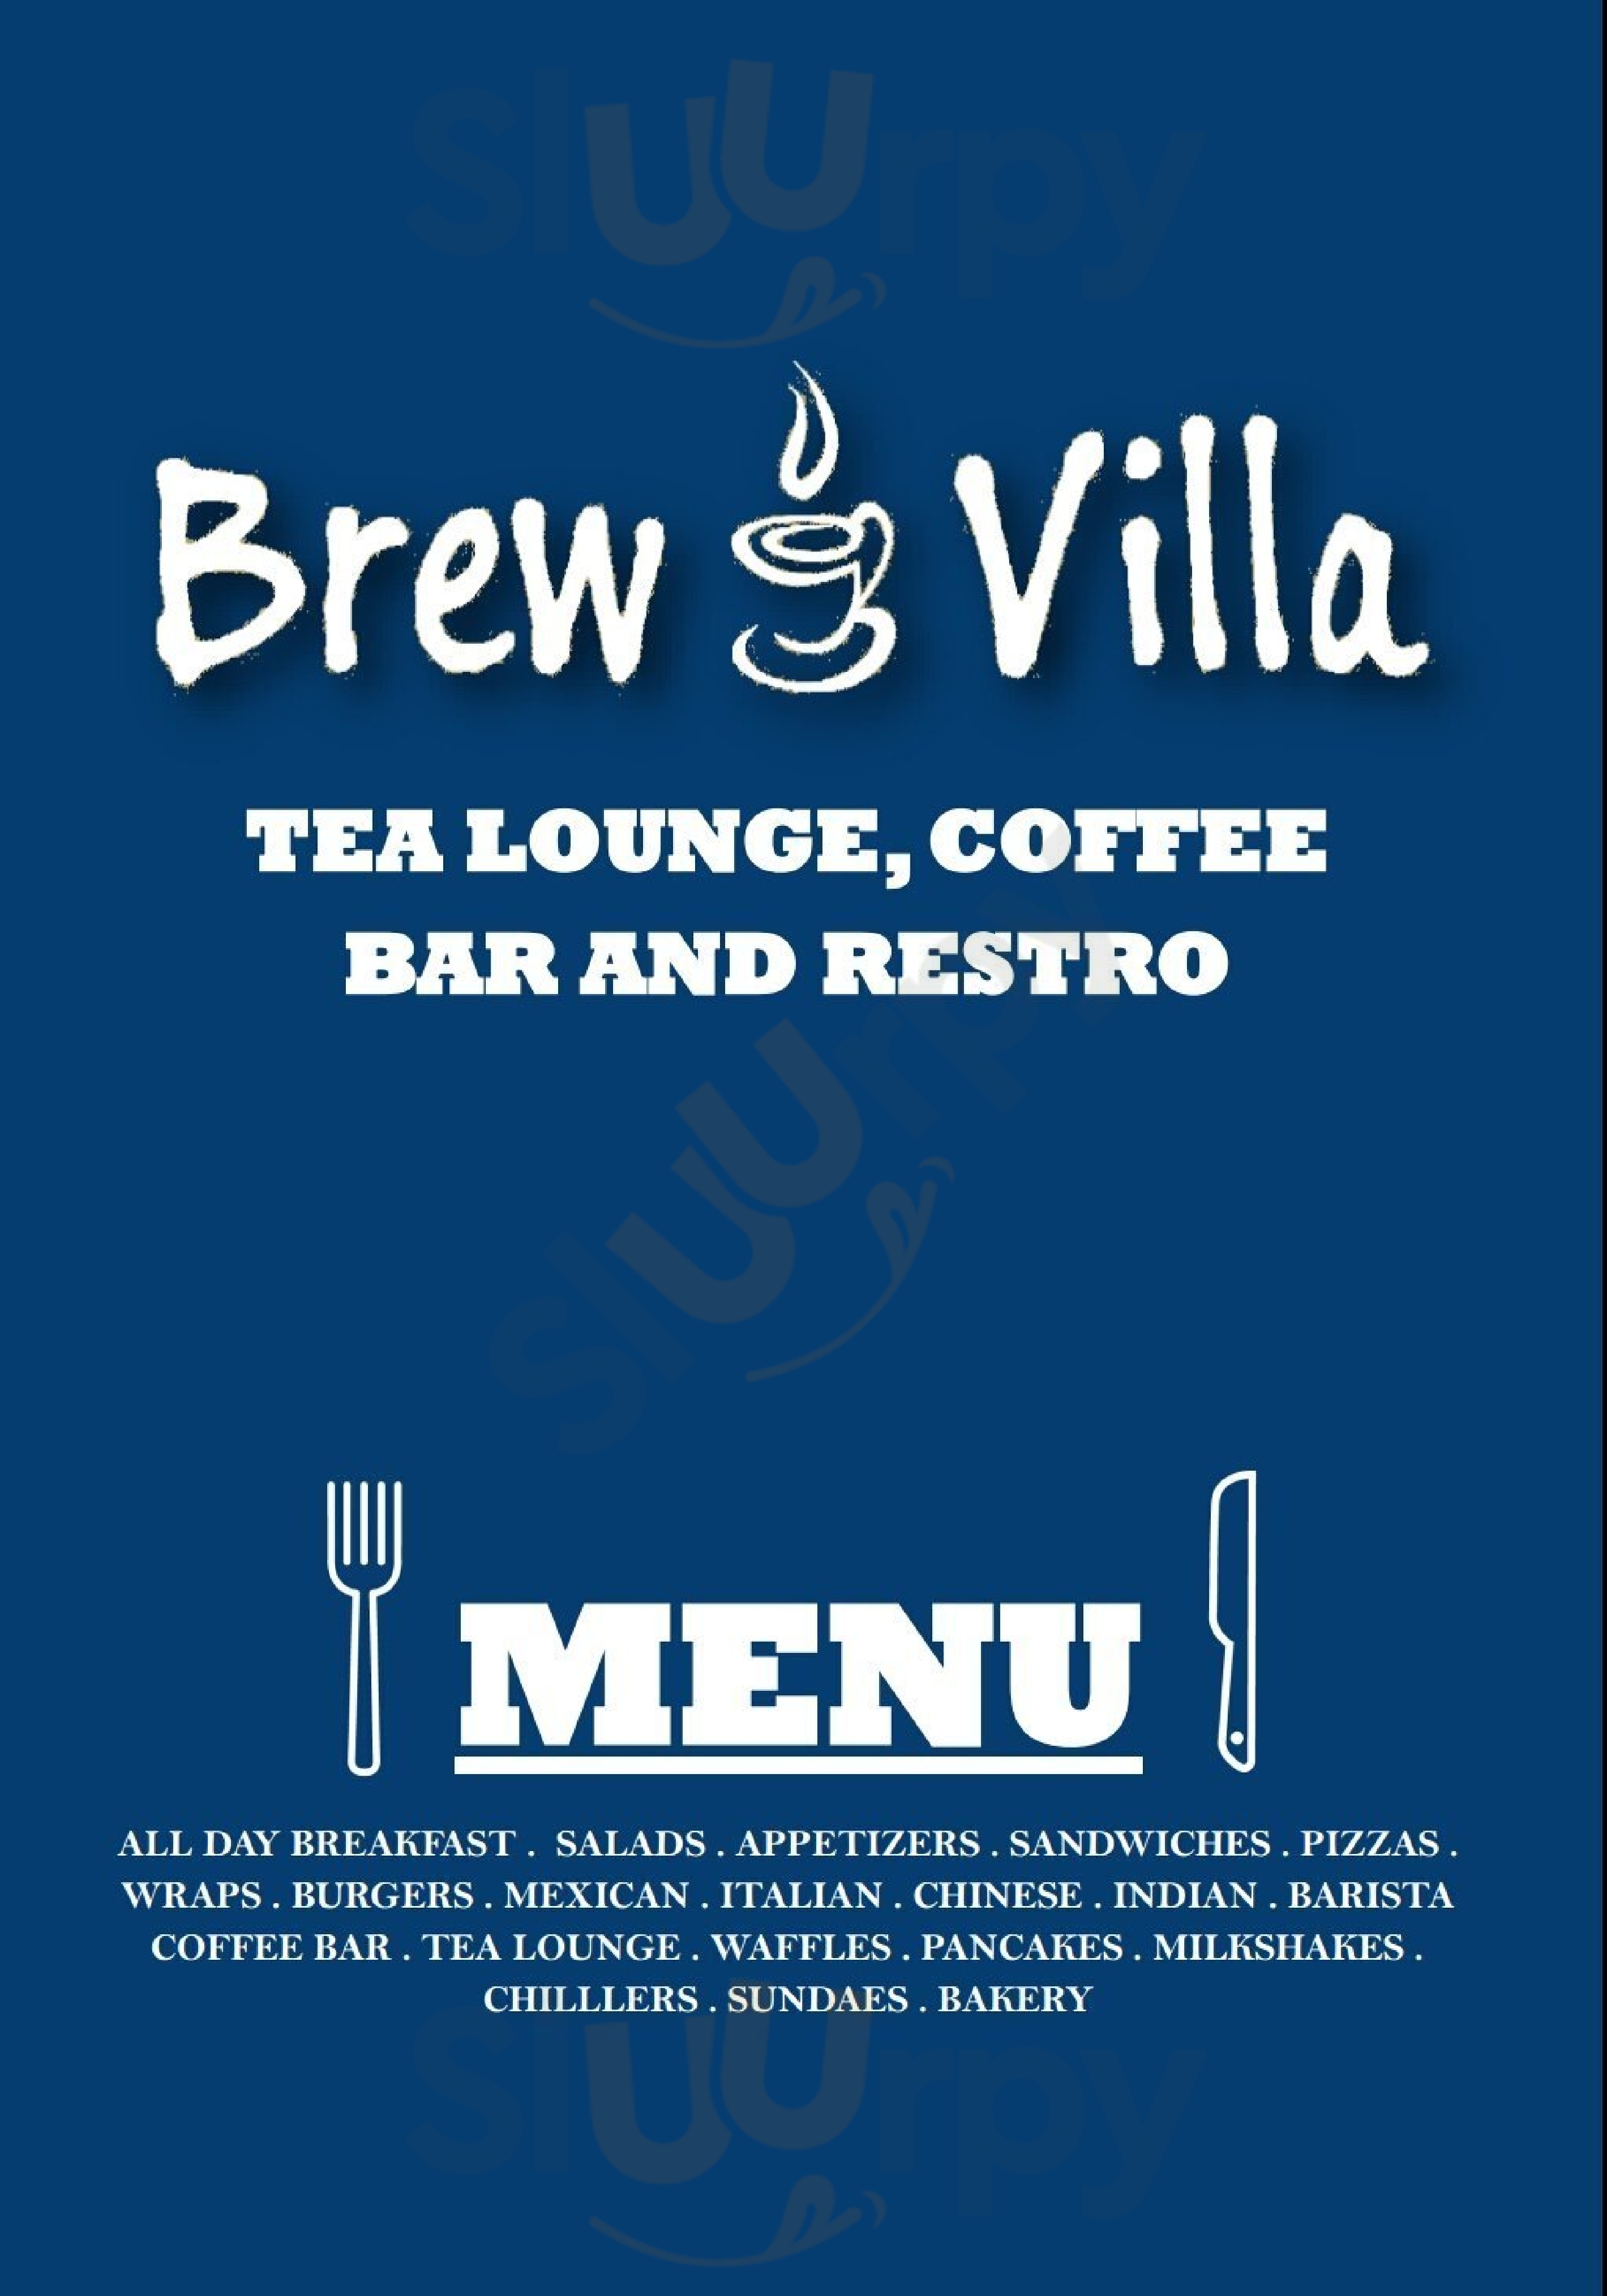 Brew Villa - Tea Lounge & Coffee Bar Udaipur Menu - 1